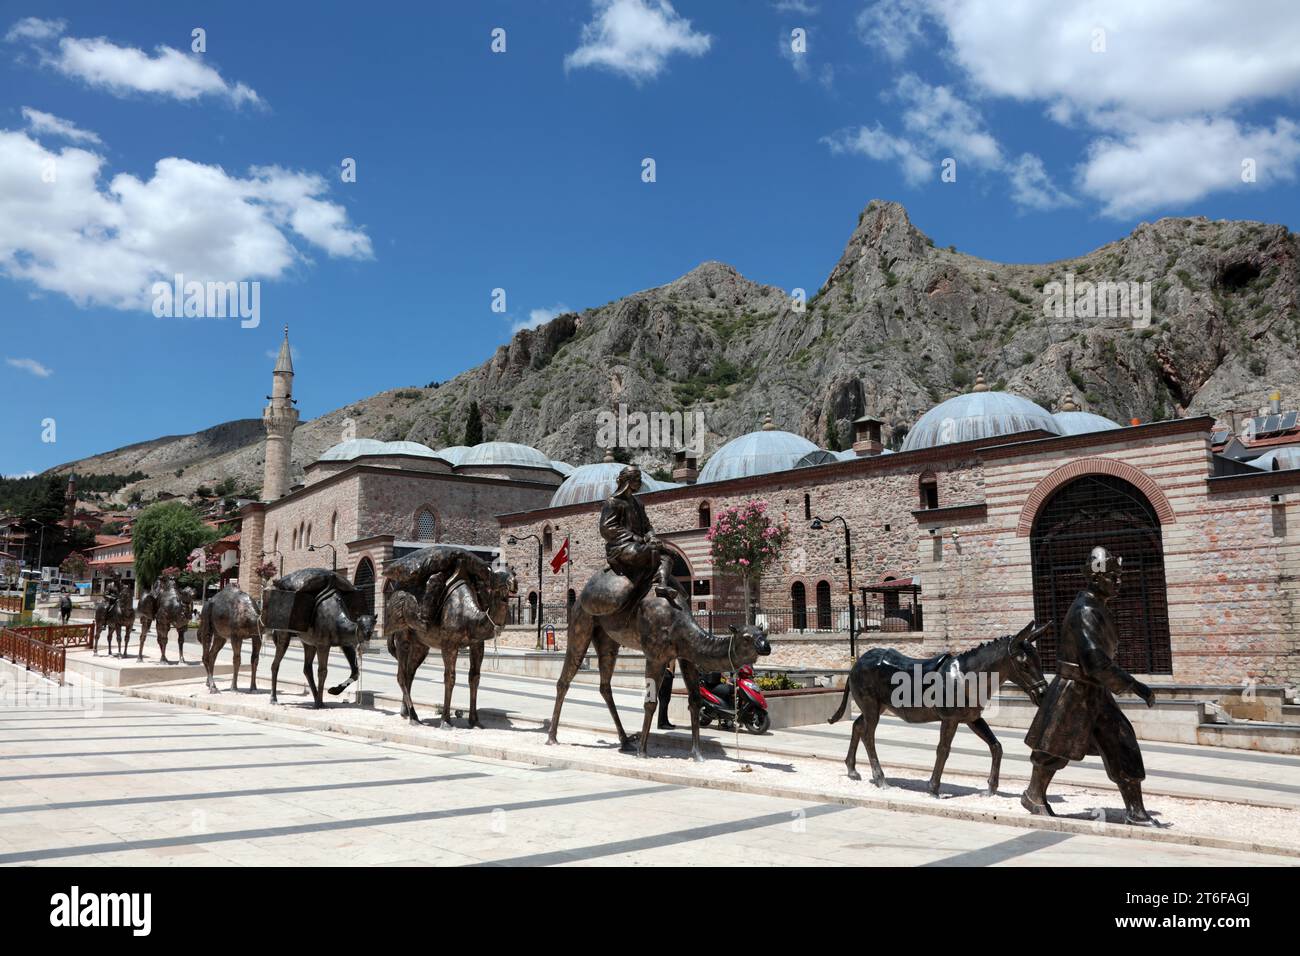 Camel caravan statues in the old city center of Tokat. Tokat, Turkey. Stock Photo